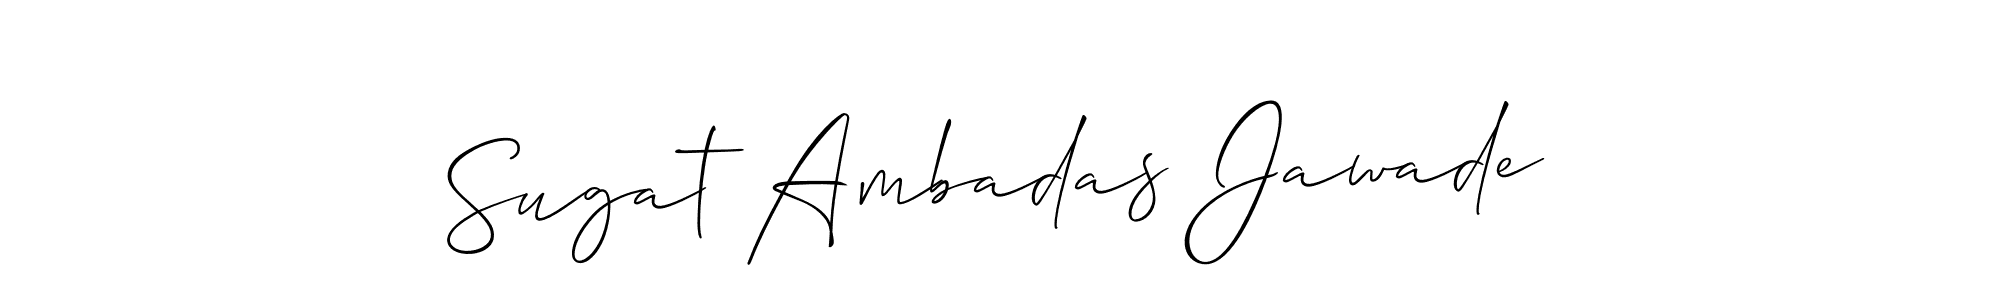 How to Draw Sugat Ambadas Jawade signature style? Allison_Script is a latest design signature styles for name Sugat Ambadas Jawade. Sugat Ambadas Jawade signature style 2 images and pictures png